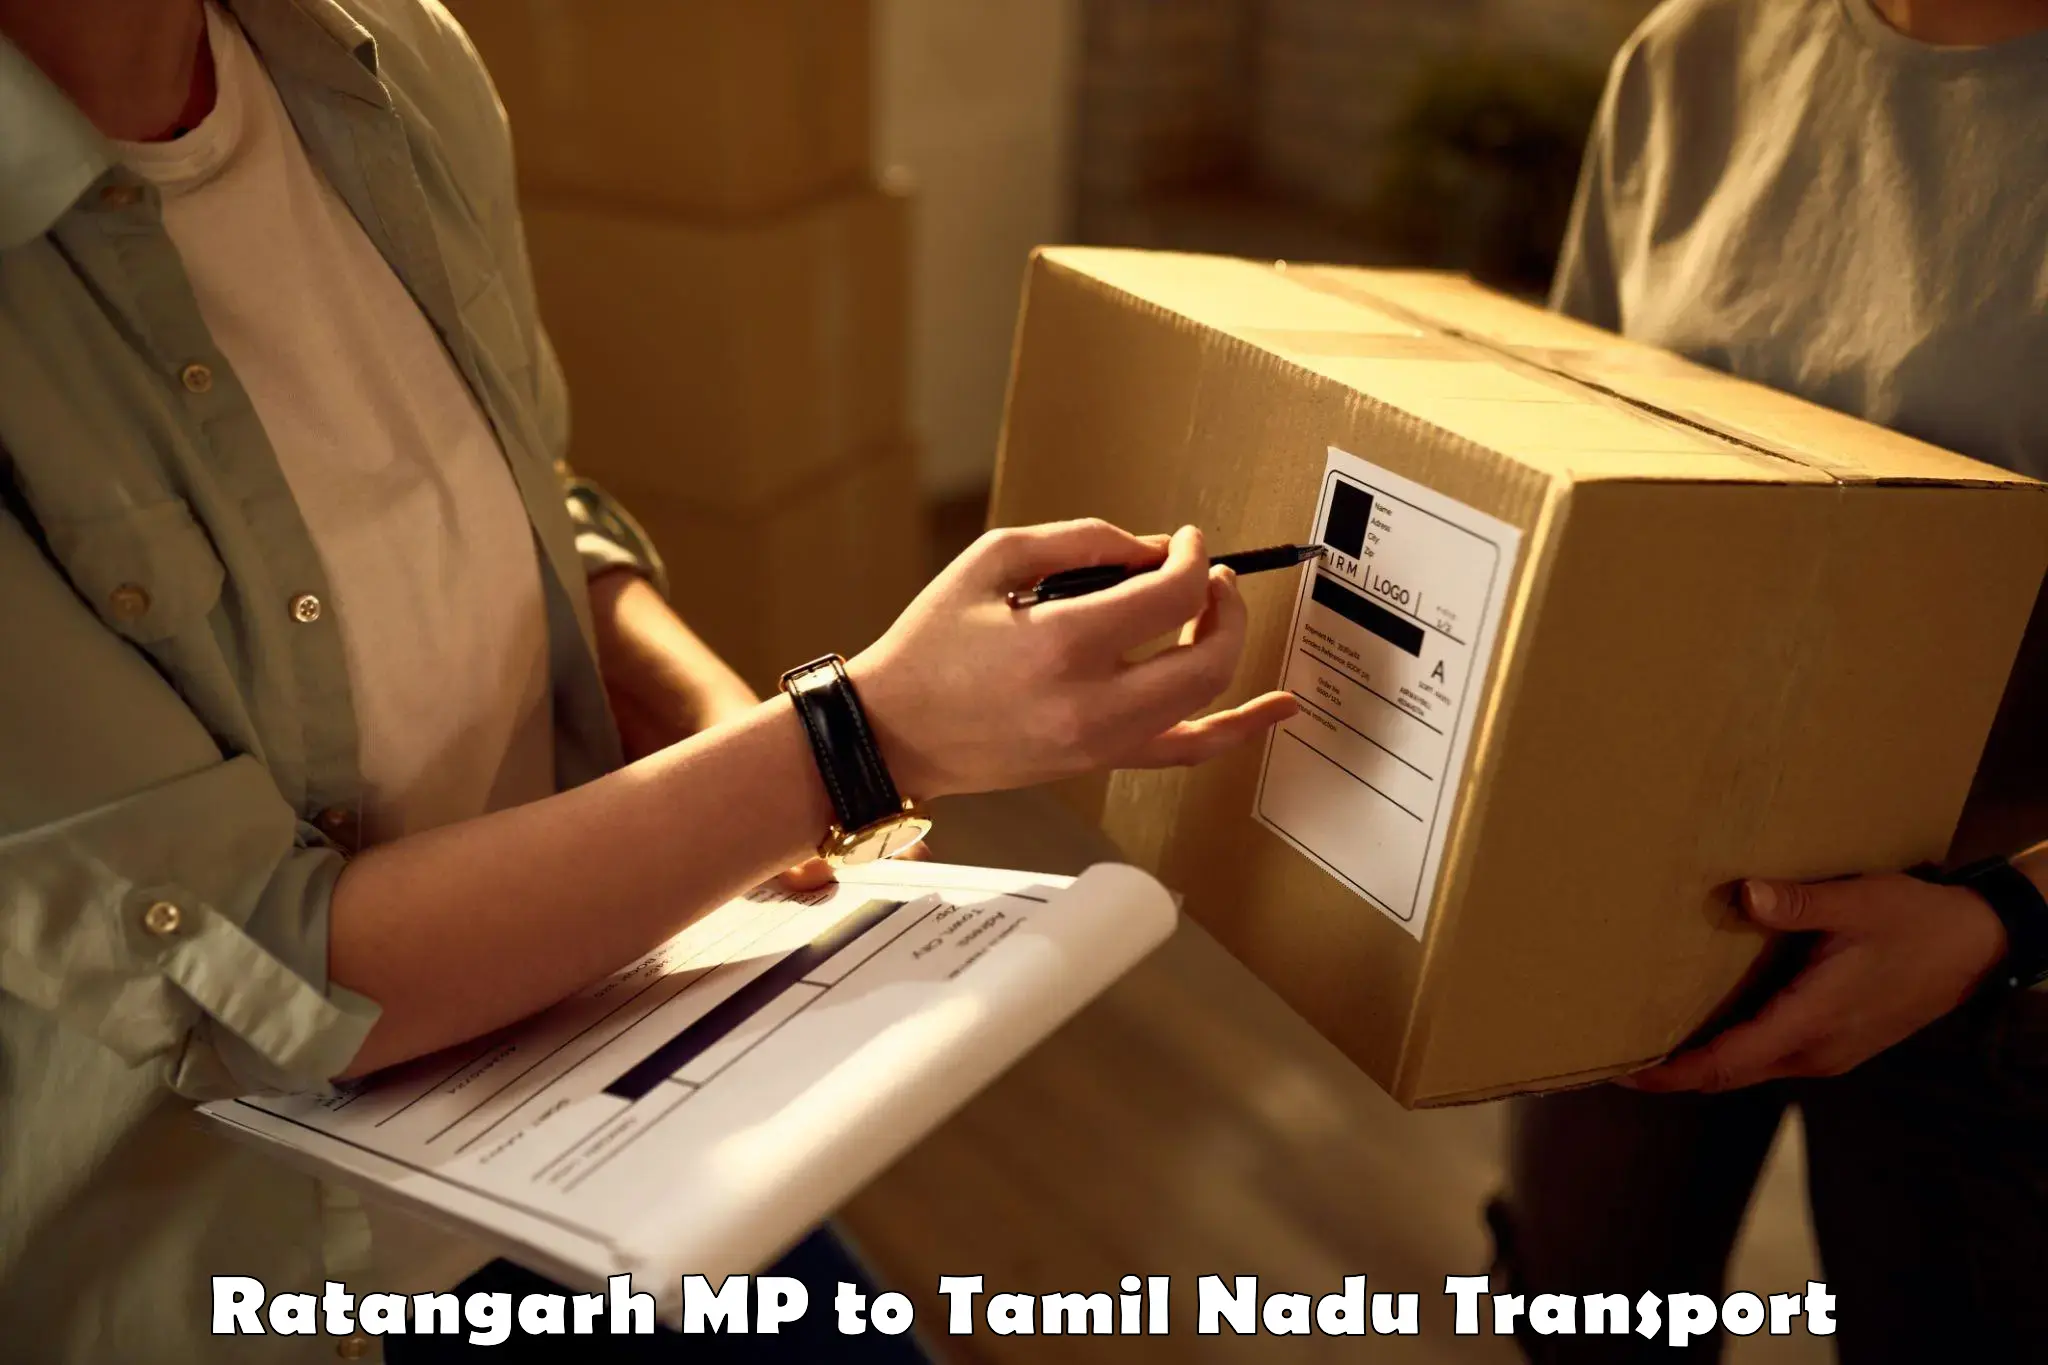 Daily parcel service transport Ratangarh MP to Palani